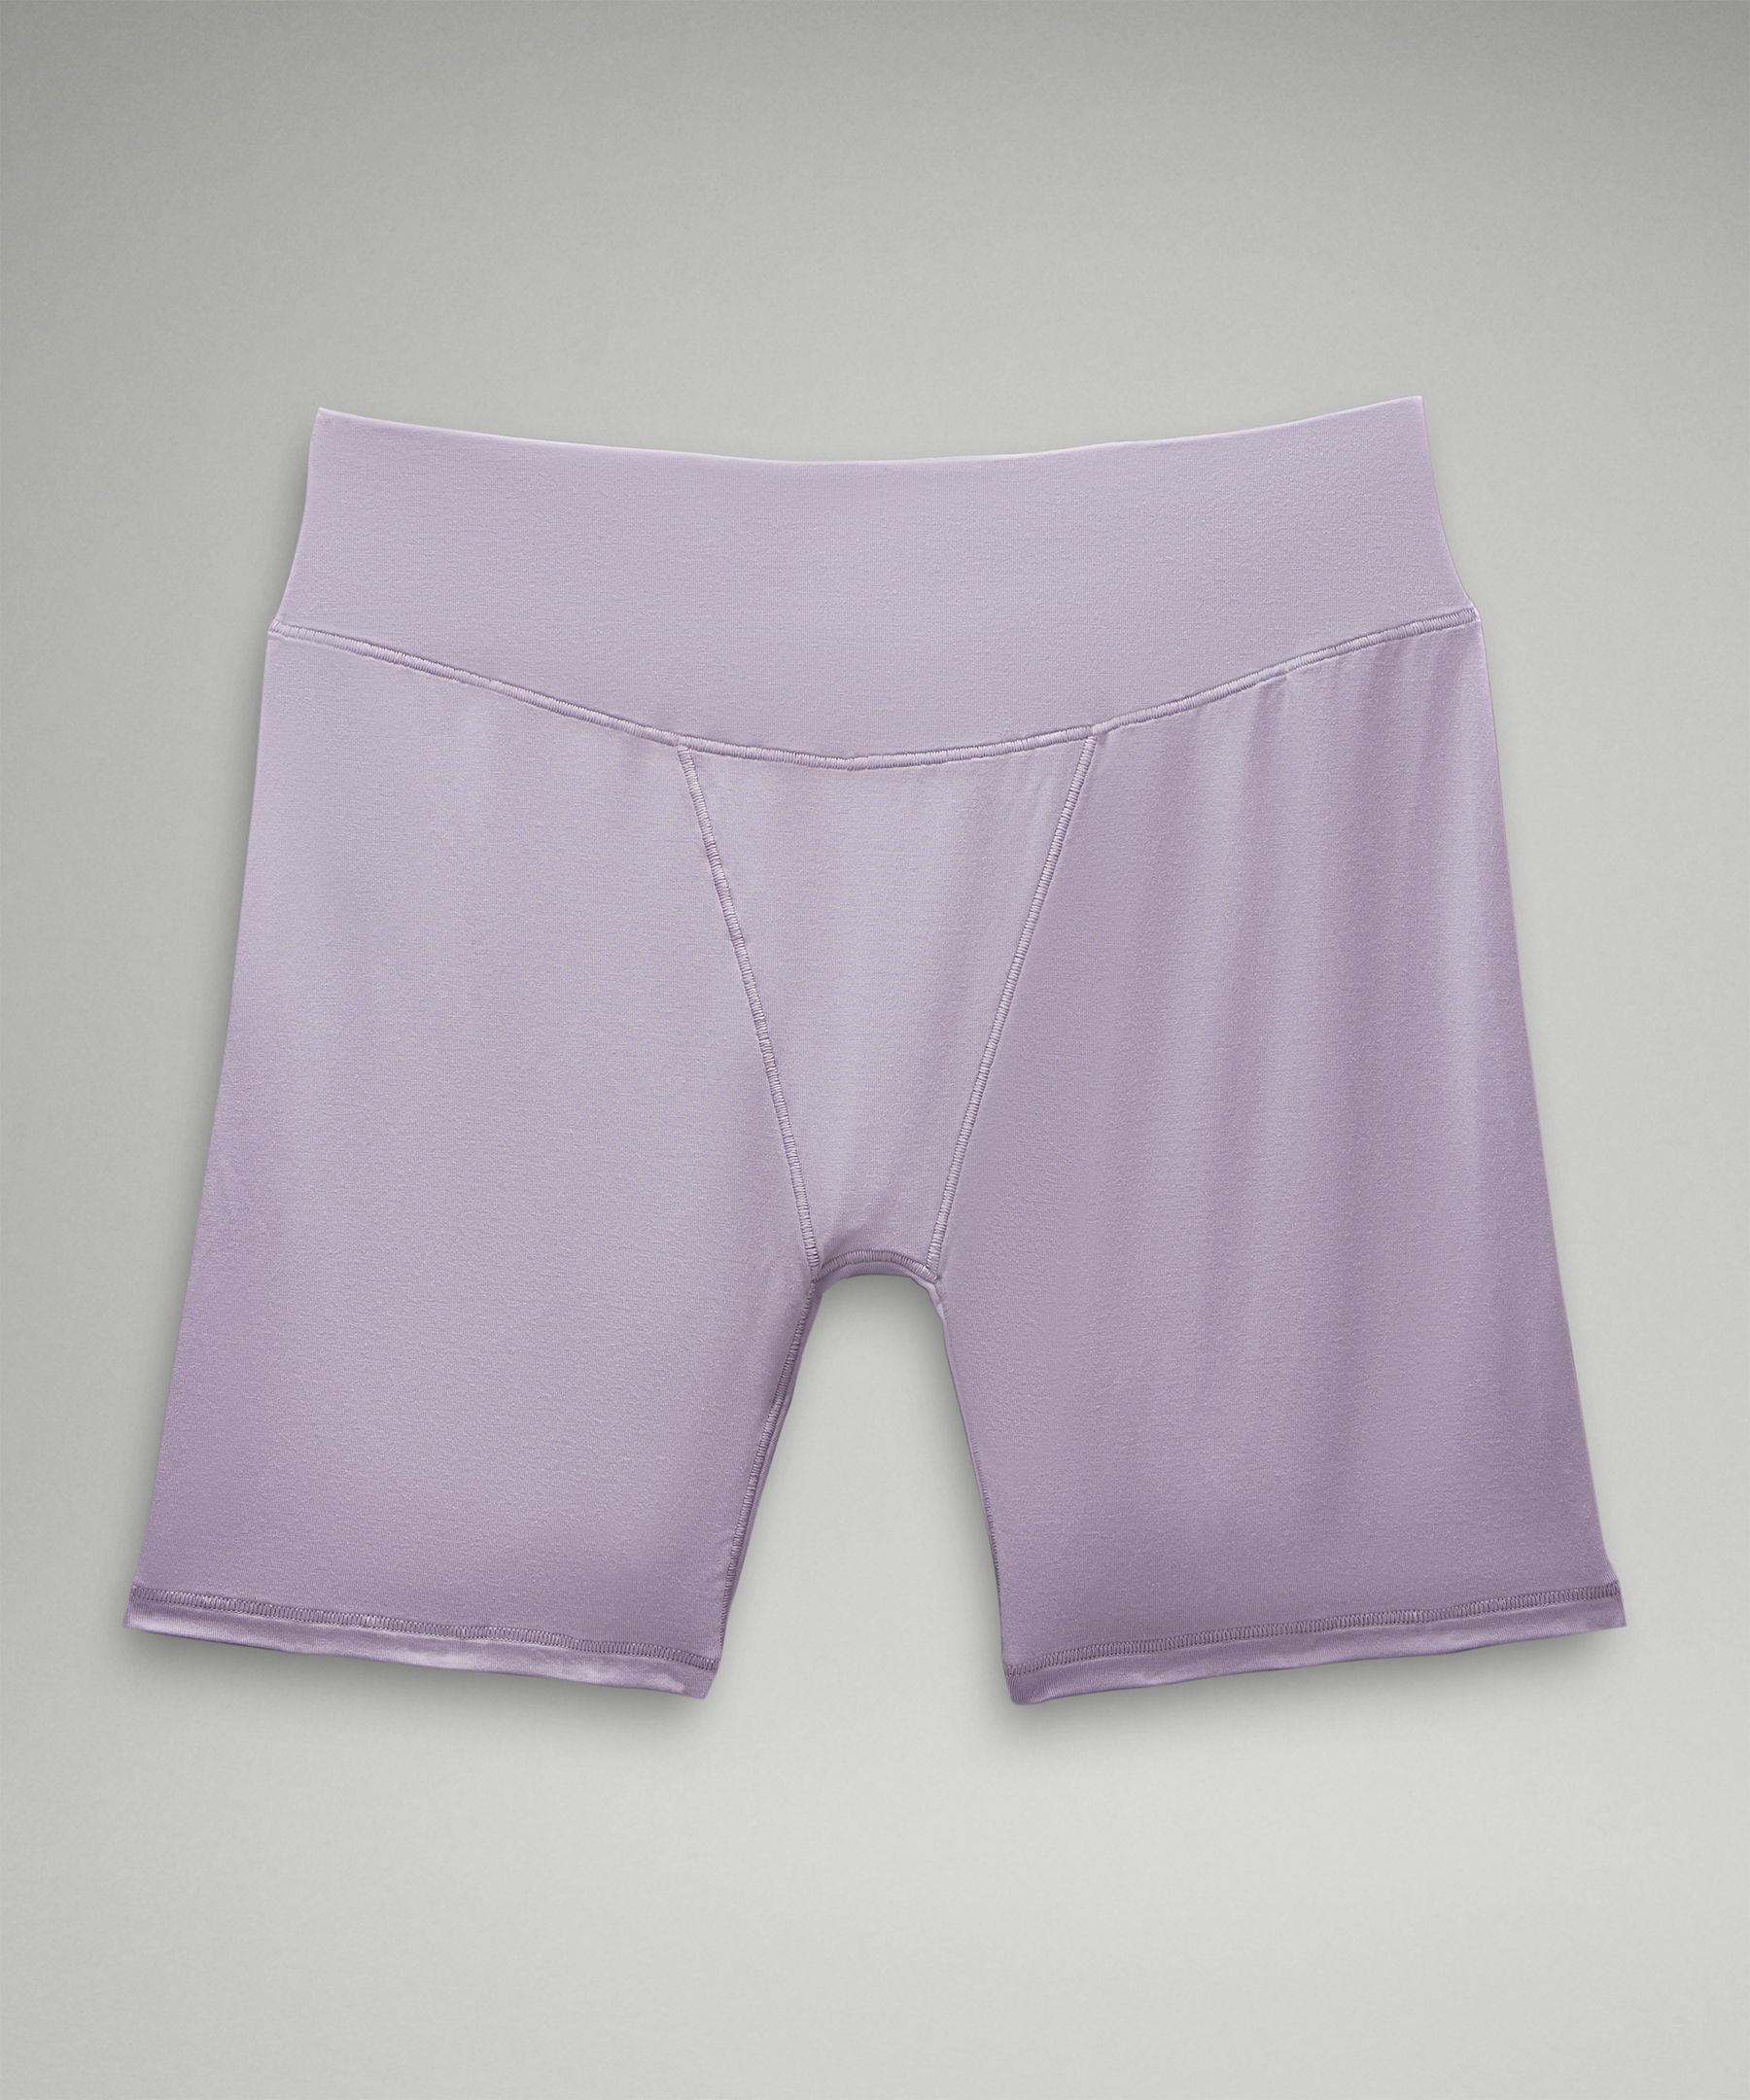 Lululemon UnderEase Super-High-Rise Shortie Underwear *2 Pack - Medium  Forest / Vapor - lulu fanatics